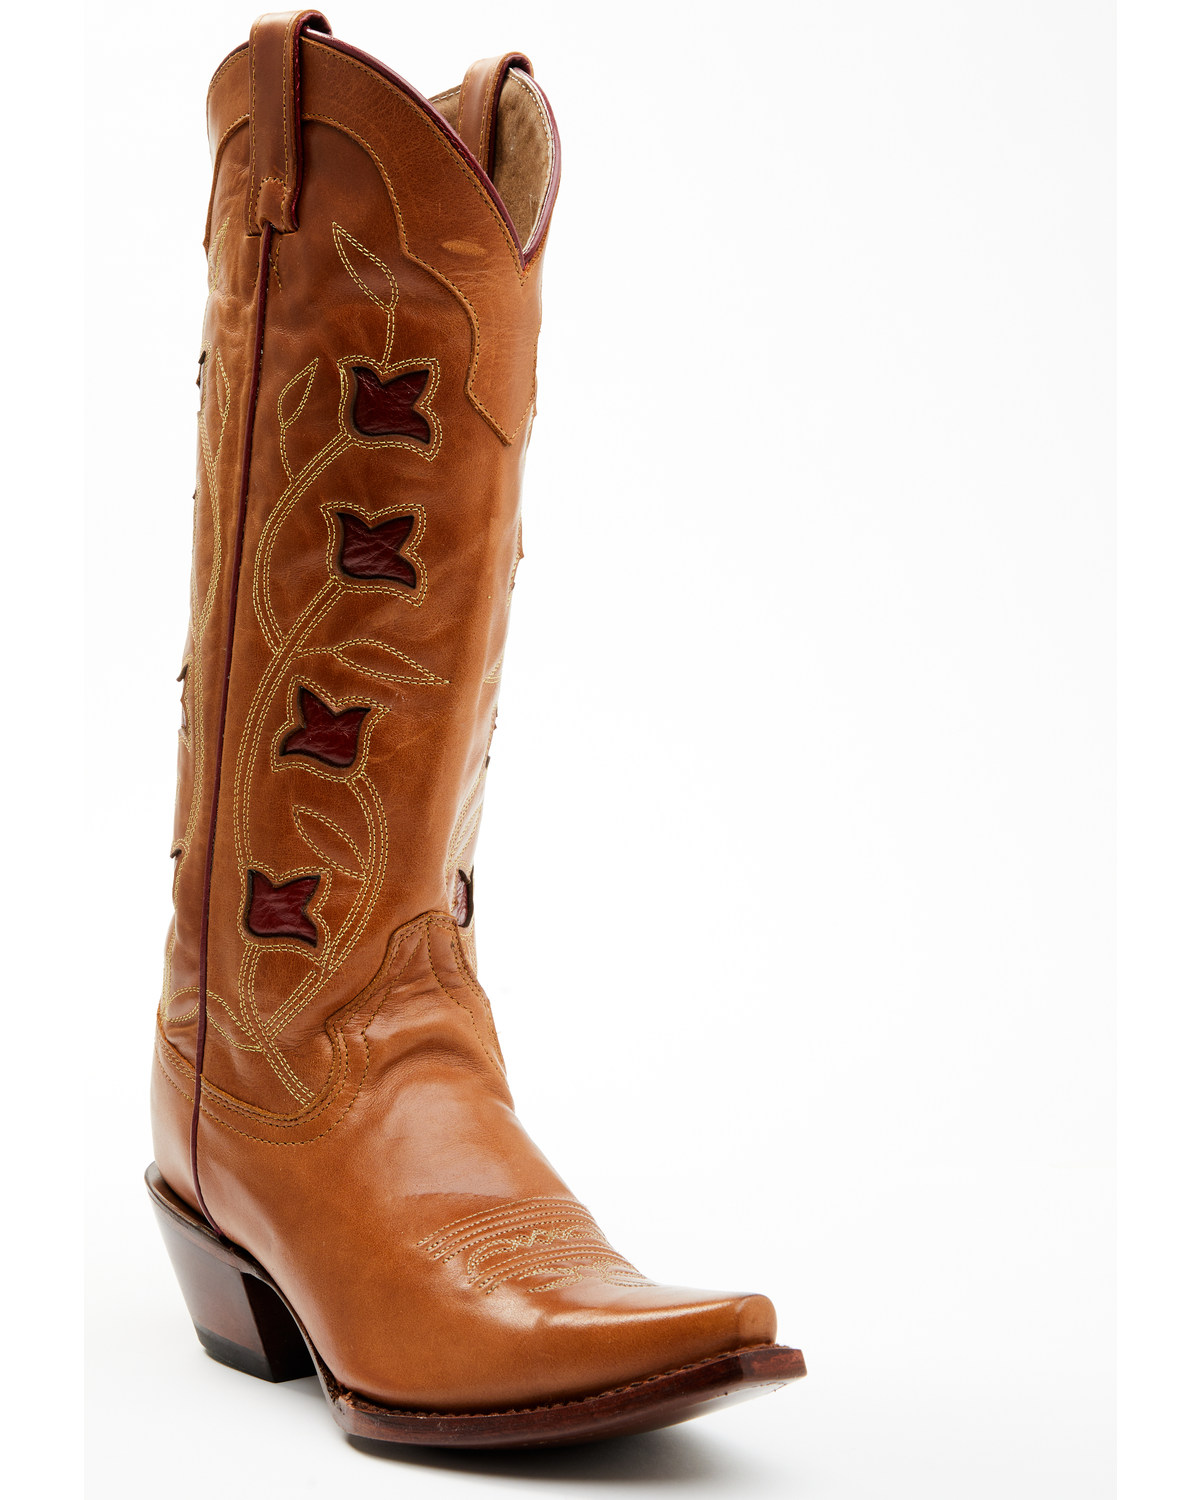 Idyllwind Women's Deville Western Boots - Snip Toe